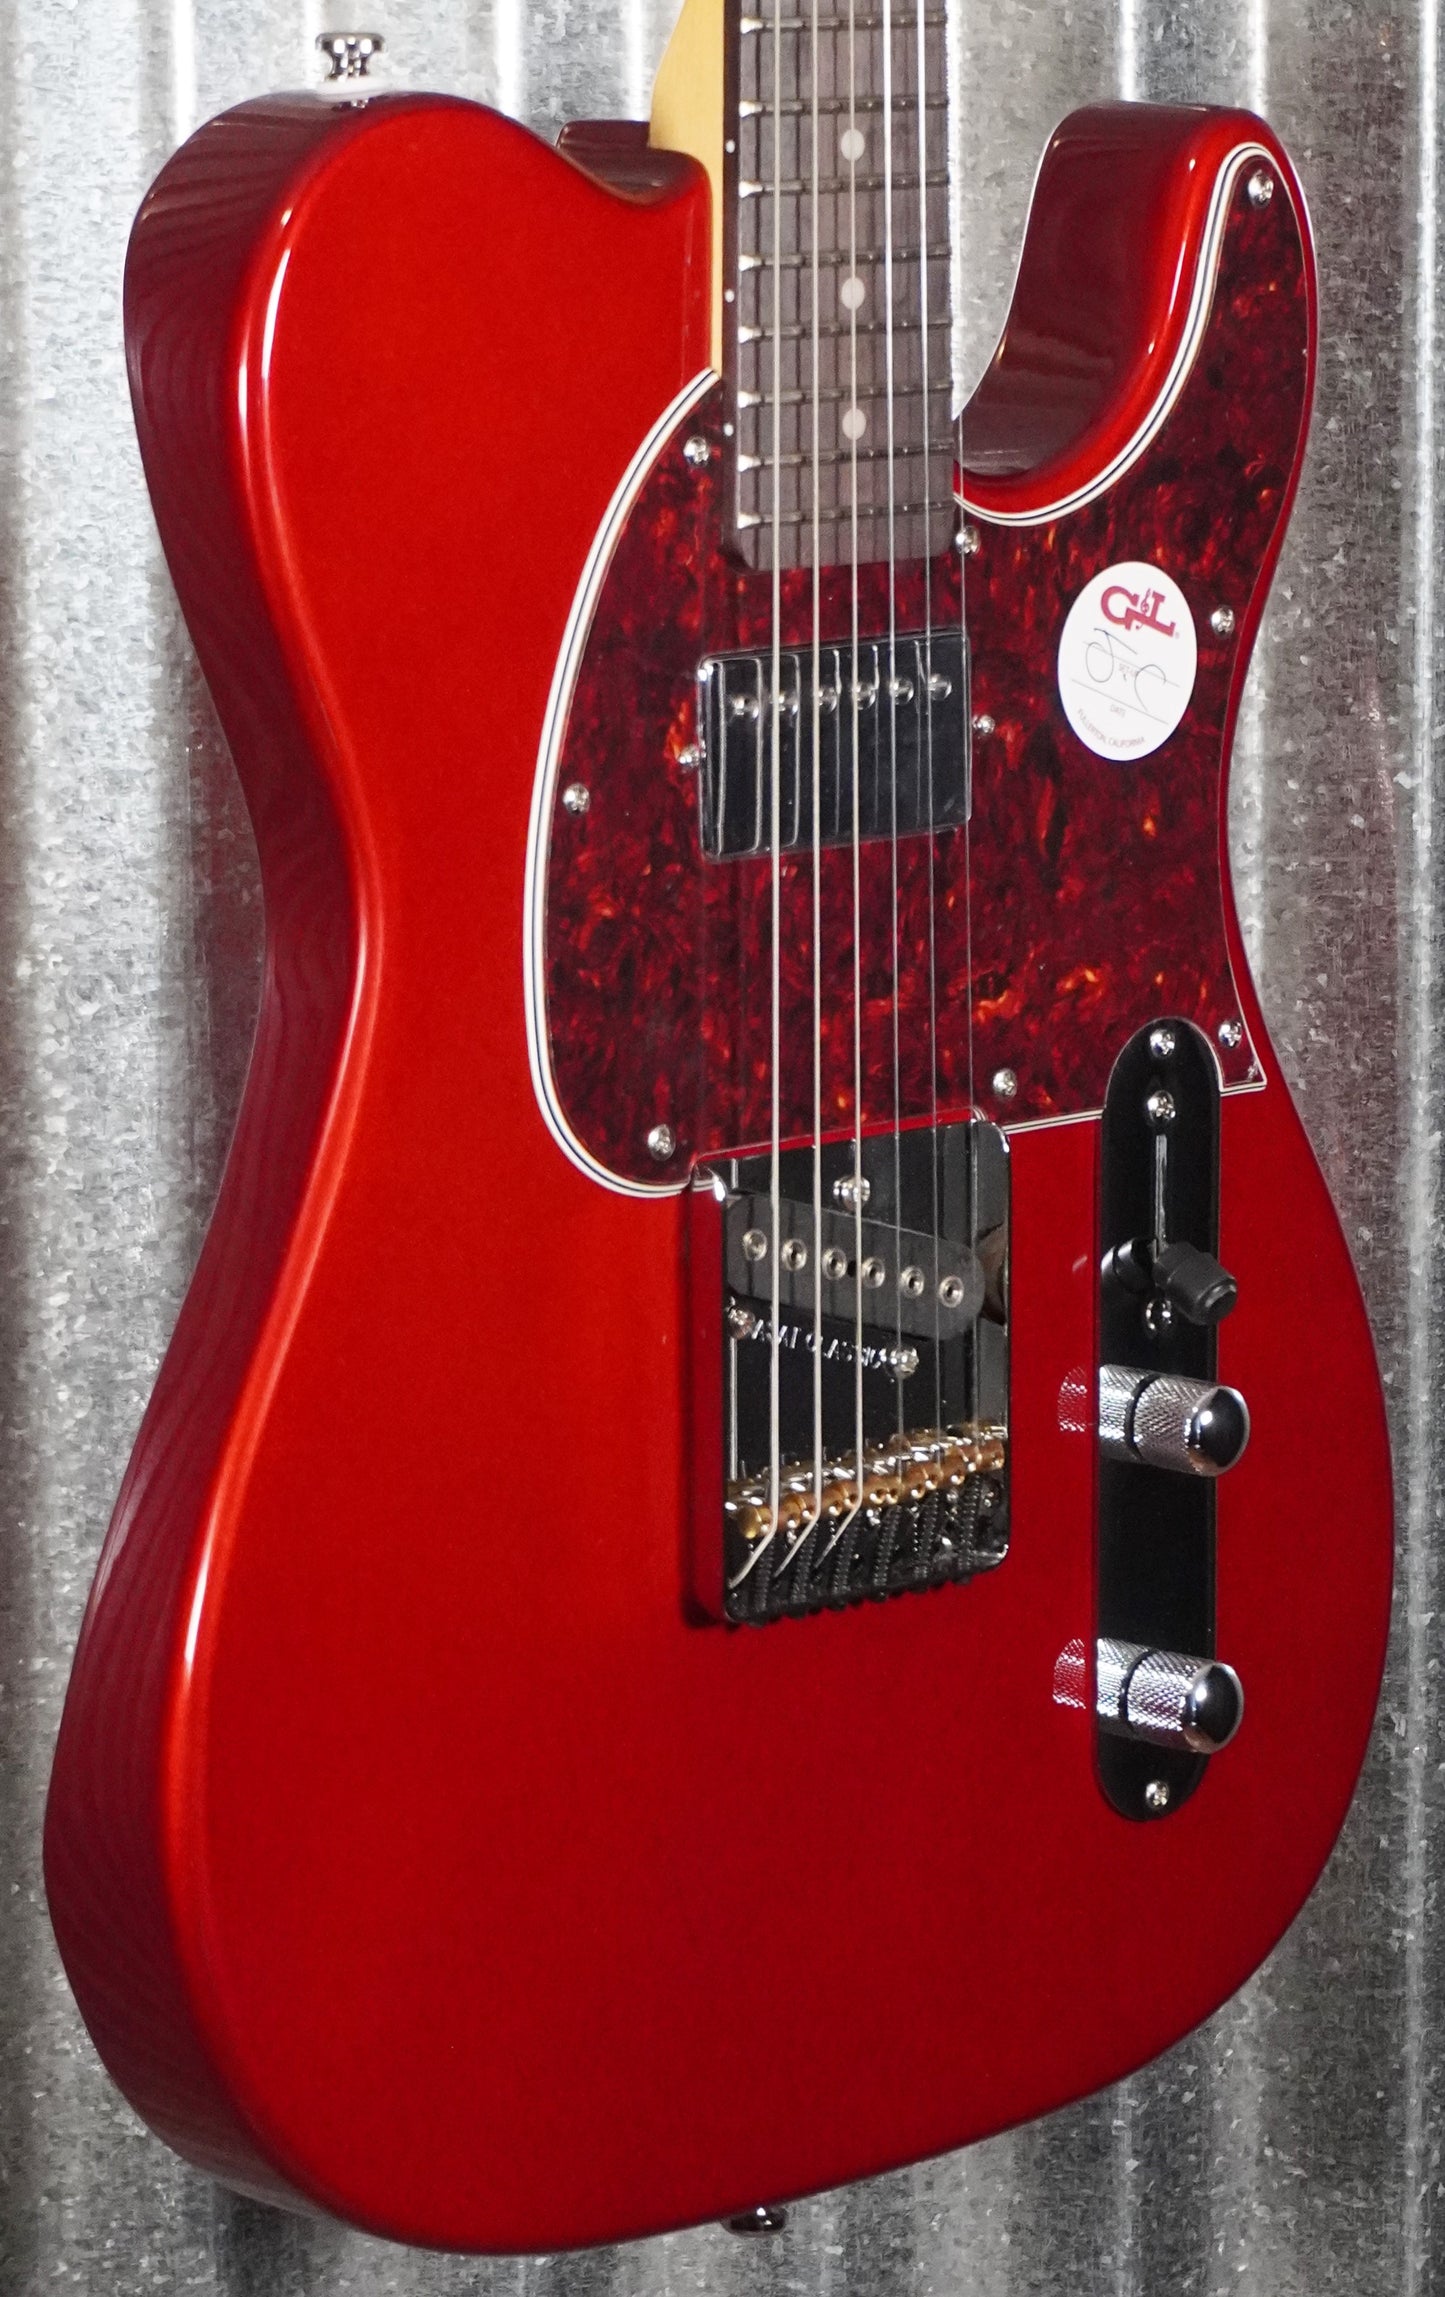 G&L Tribute ASAT Classic Bluesboy Poplar Candy Apple Red Guitar Blem #6984